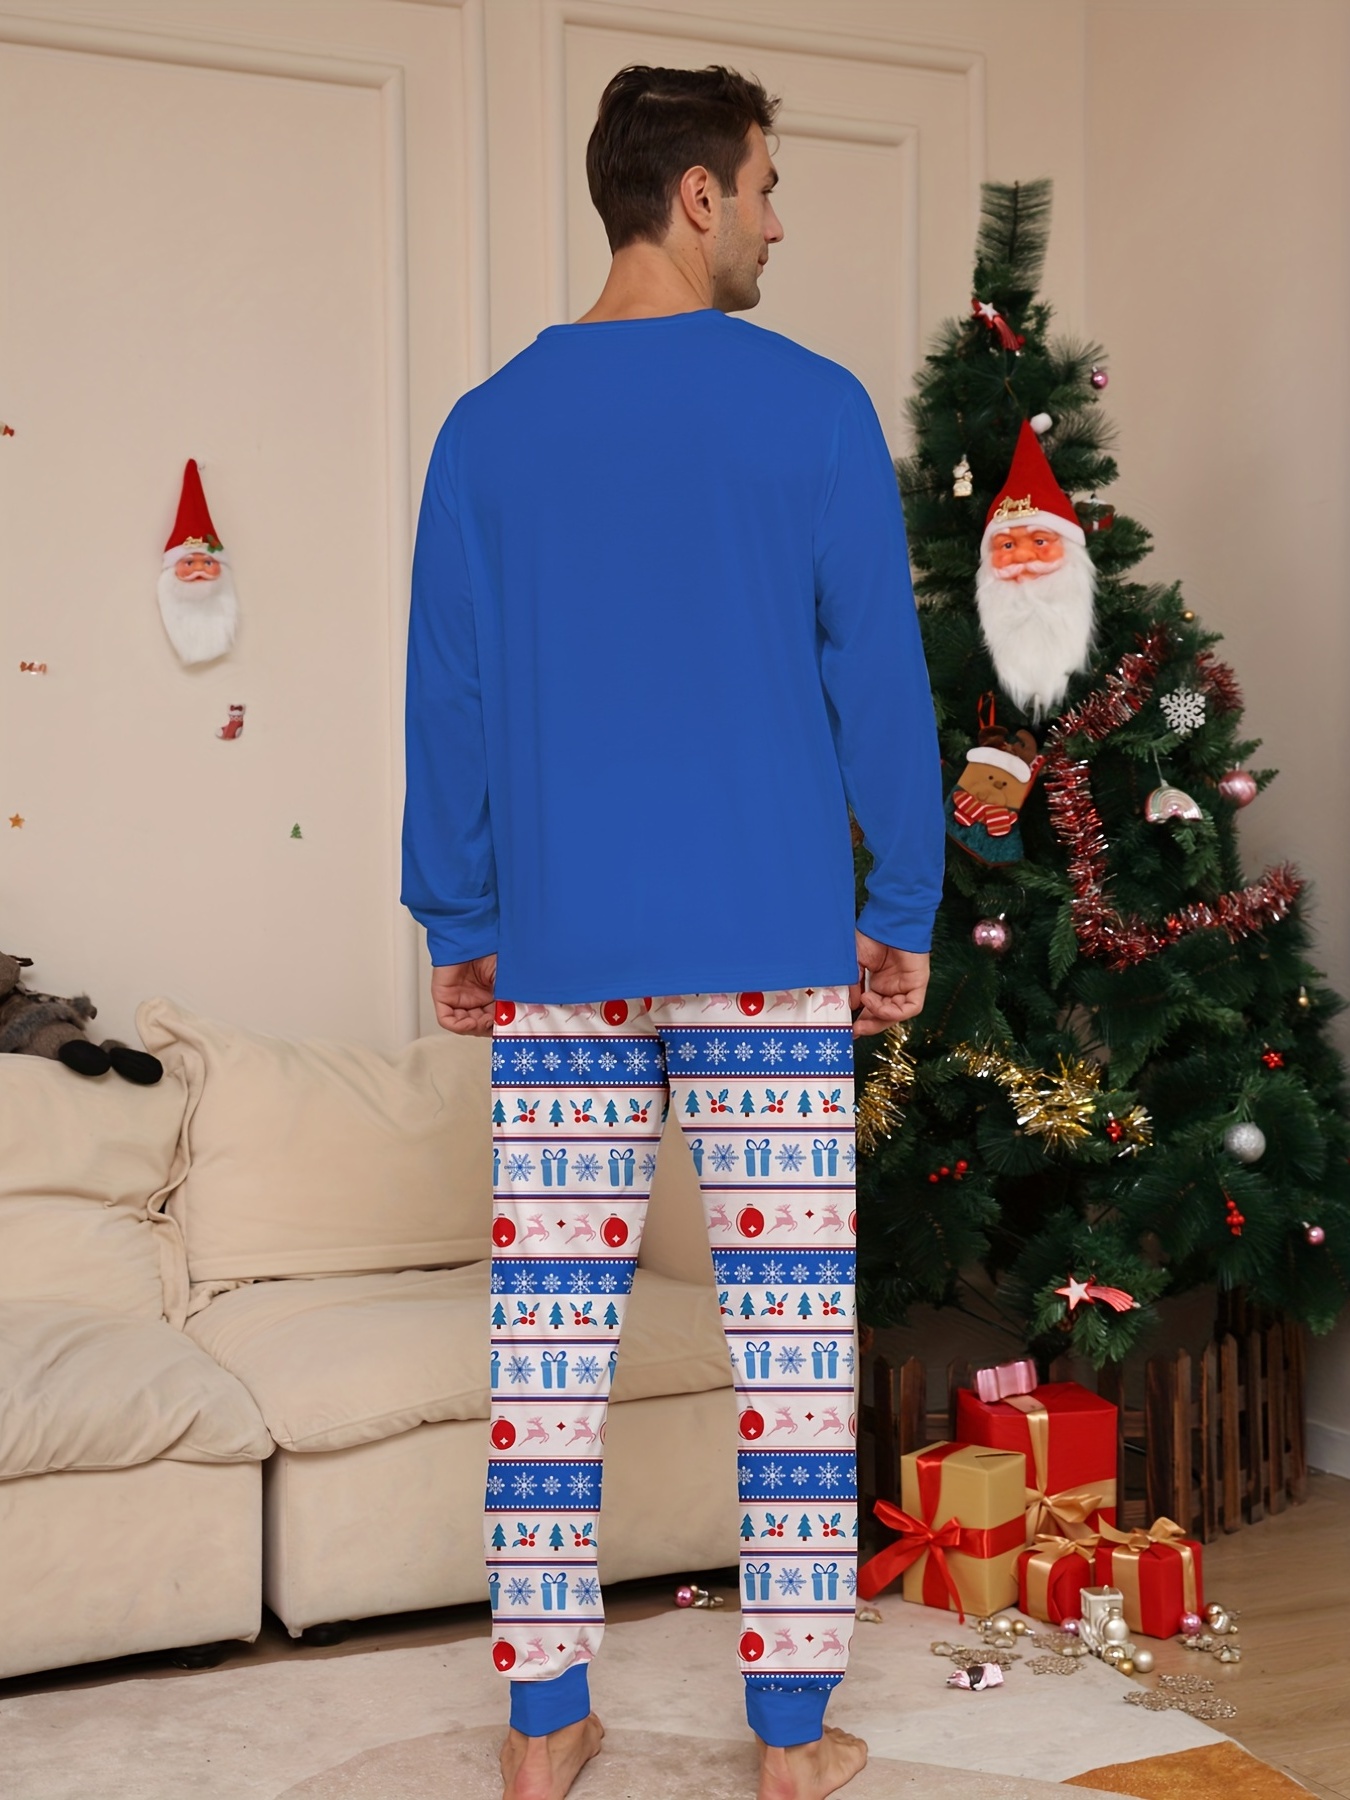 Lisingtool pajamas Men Dad Christmas Letter Print Long Sleeve Tops